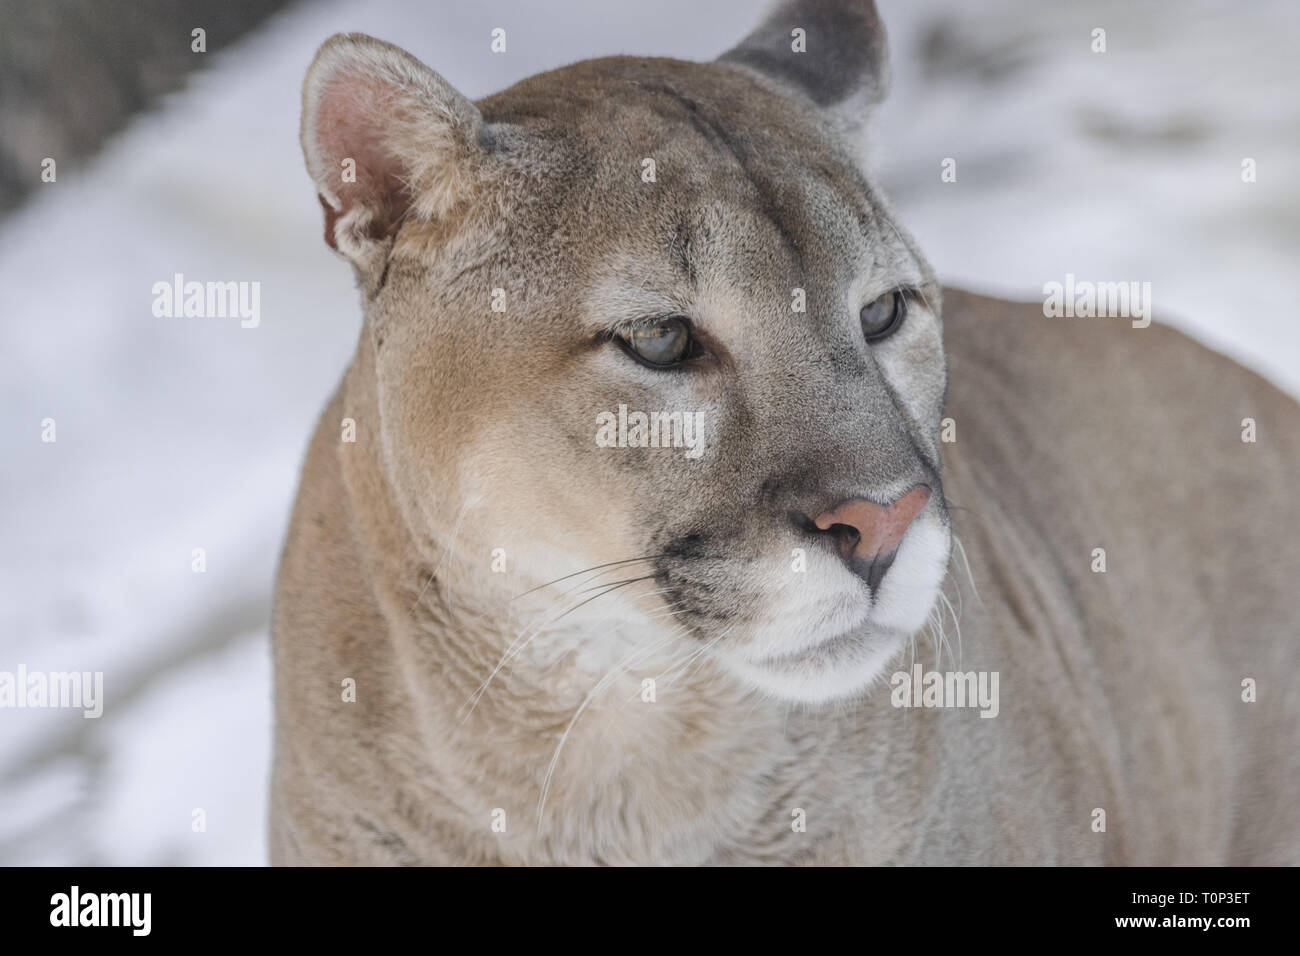 Cougar (Puma concolor), Kopf hoch, Blick nach rechts Stockfotografie - Alamy